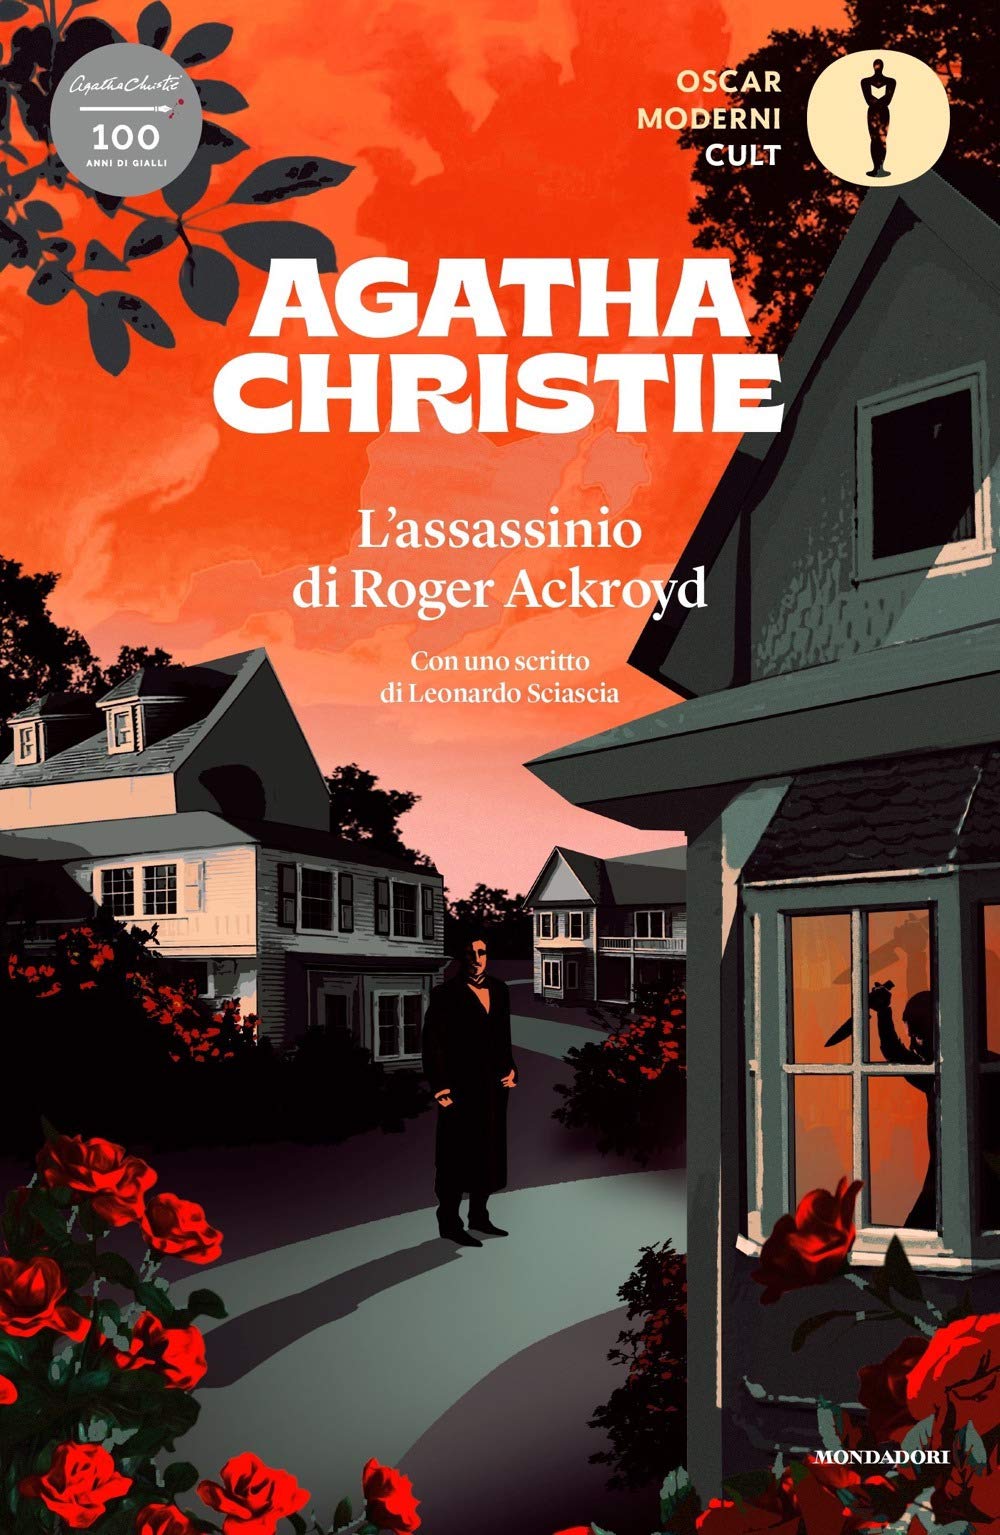 “L’assassinio di Roger Ackroyd” – Agatha Christie